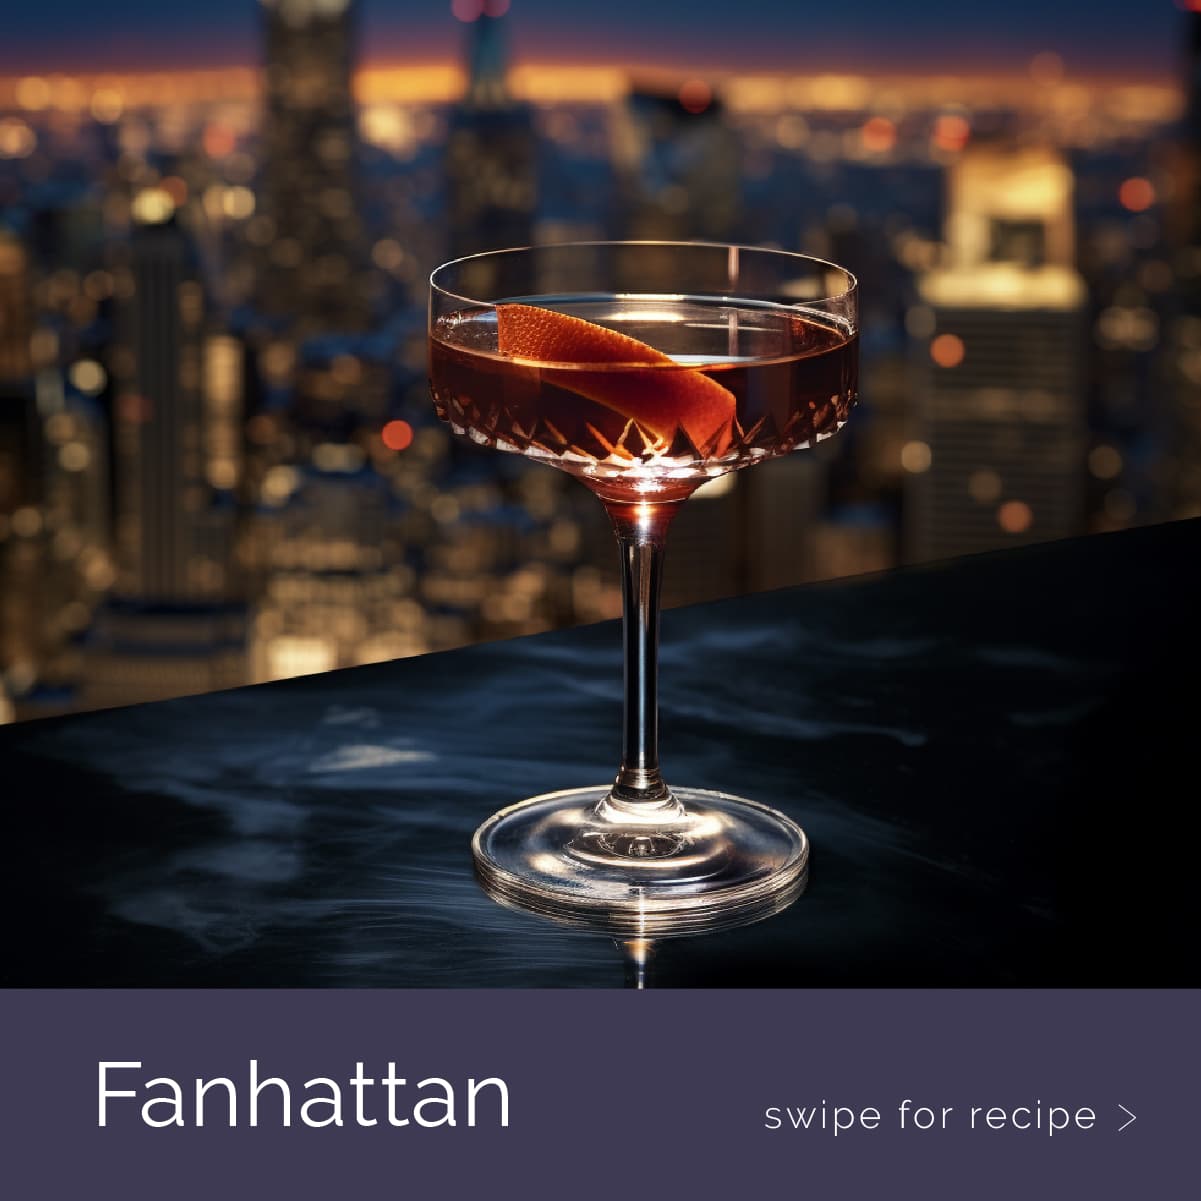 A Fanhattan cocktail